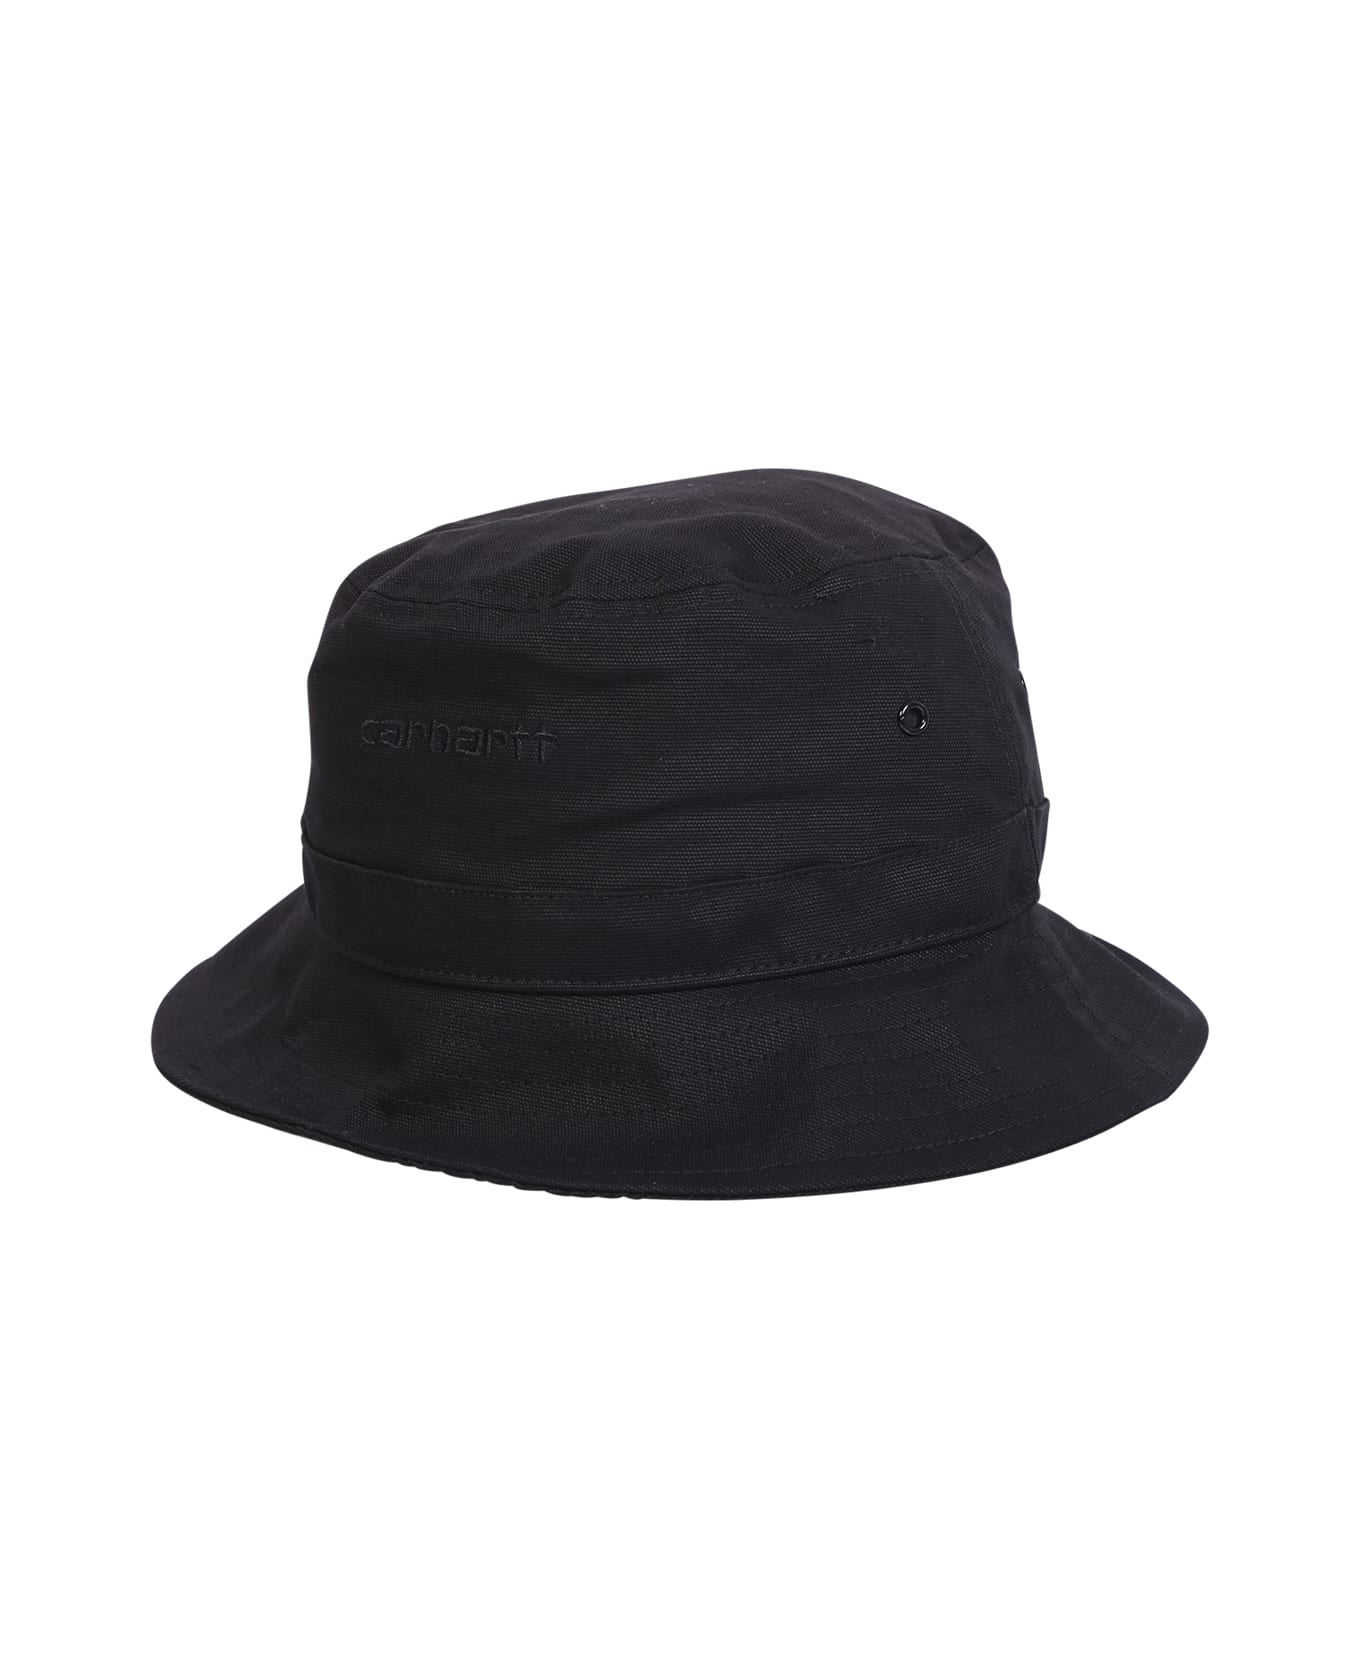 Carhartt Black Bucket Hat - Black 帽子